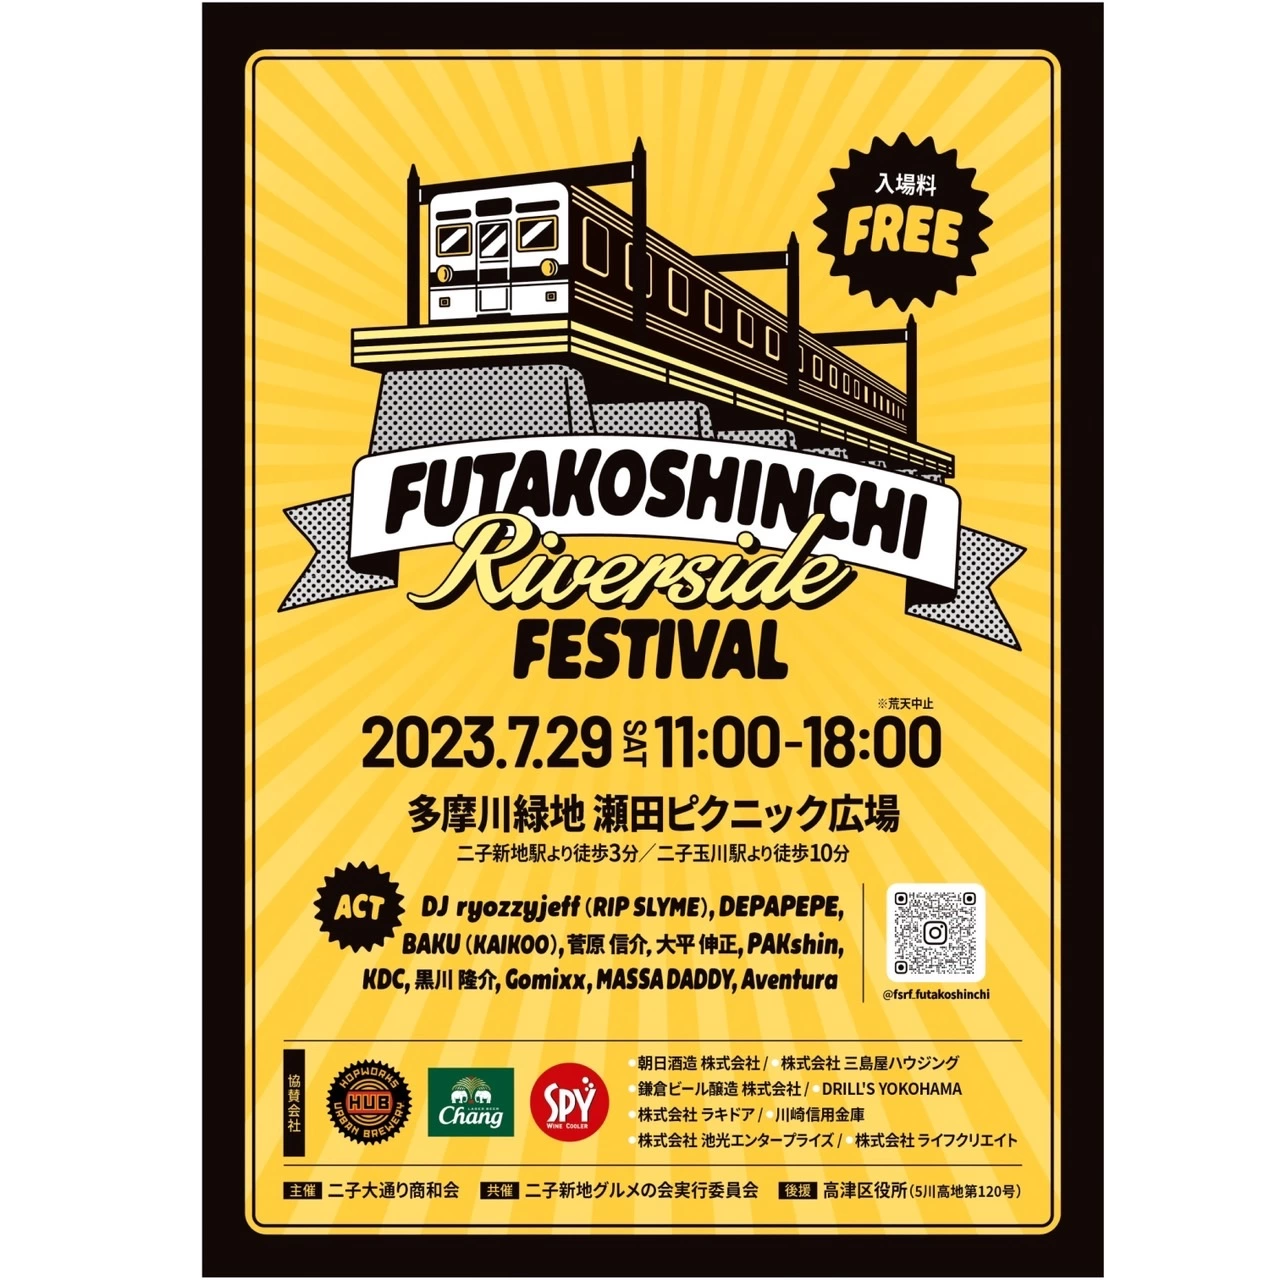 FUTAKOSHINCHI Riverside FESTIVAL